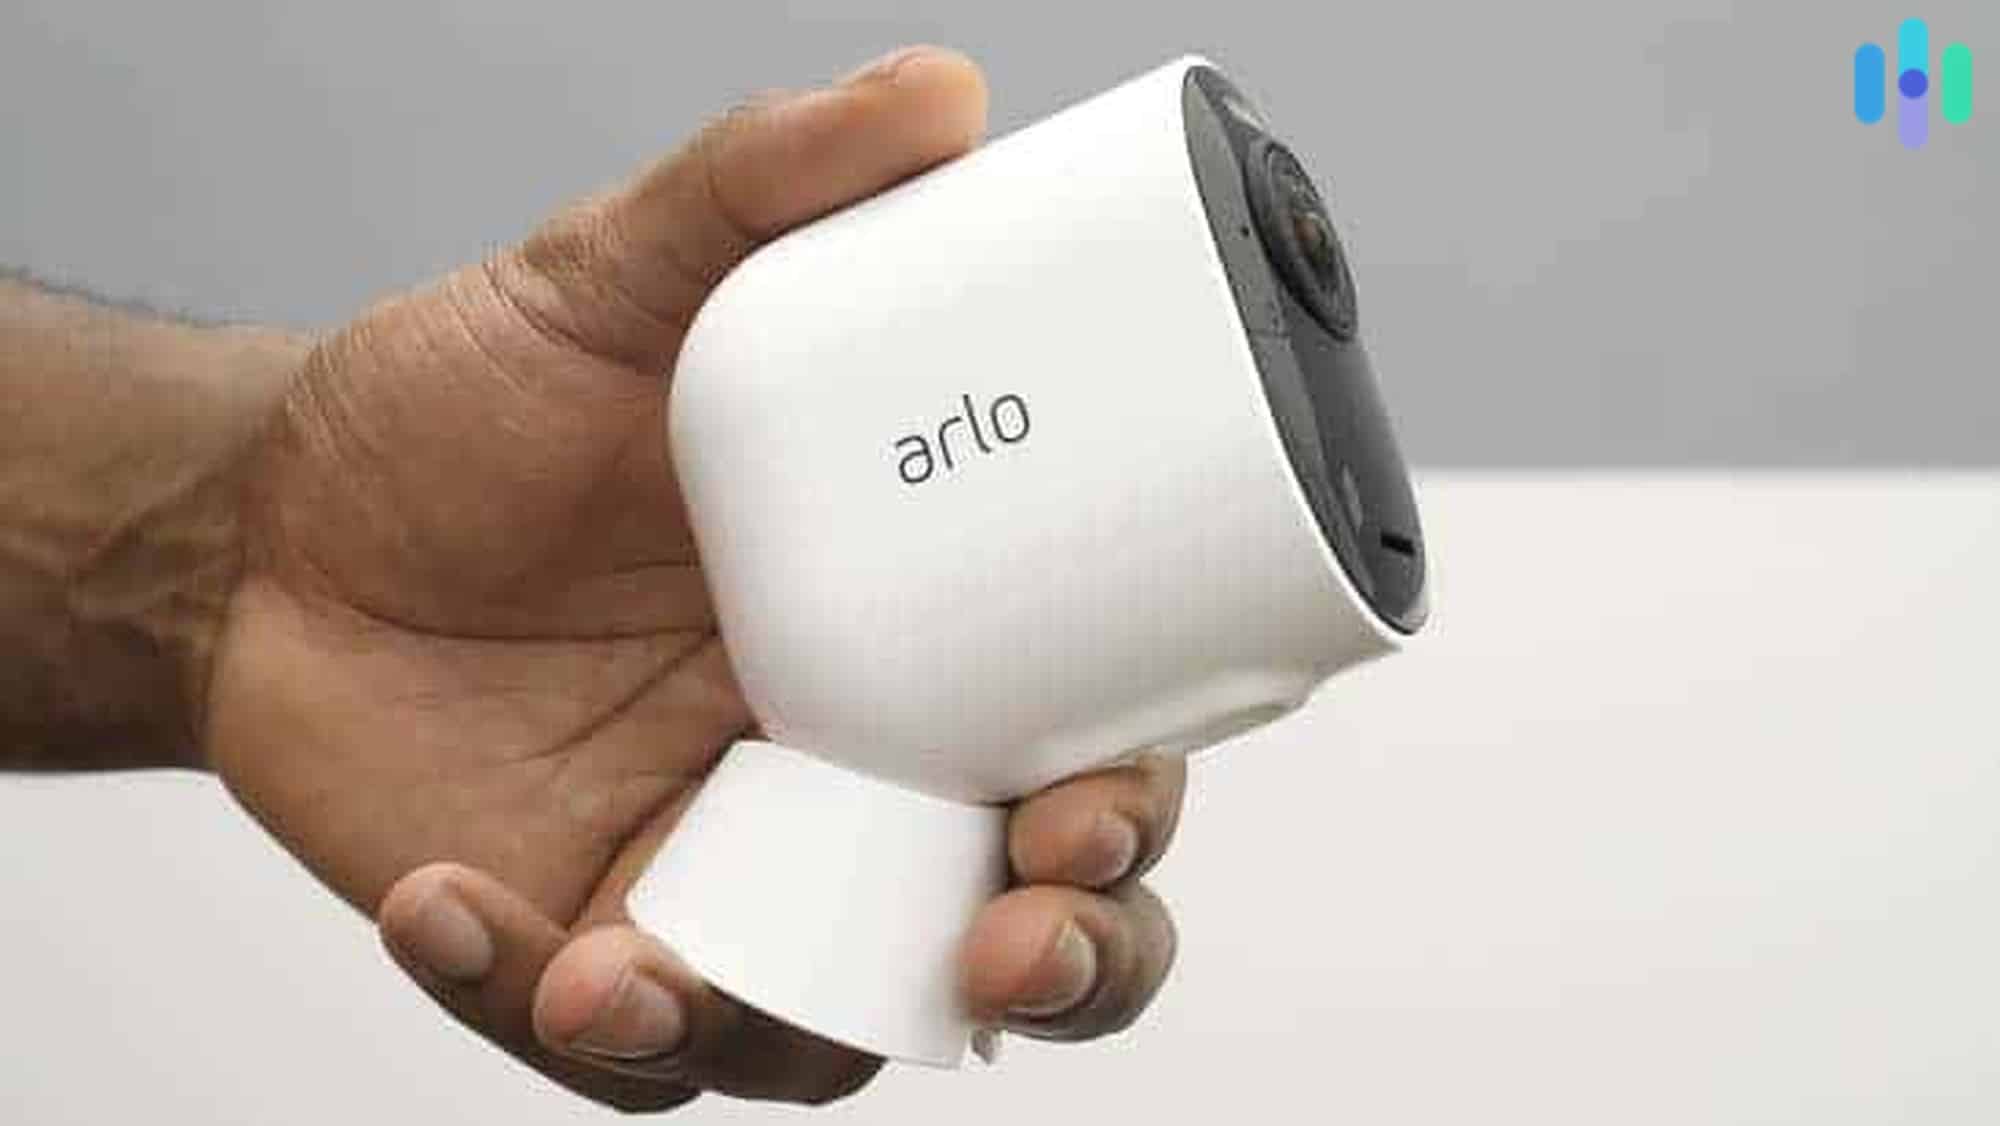 Arlo Ultra 4K Camera Review